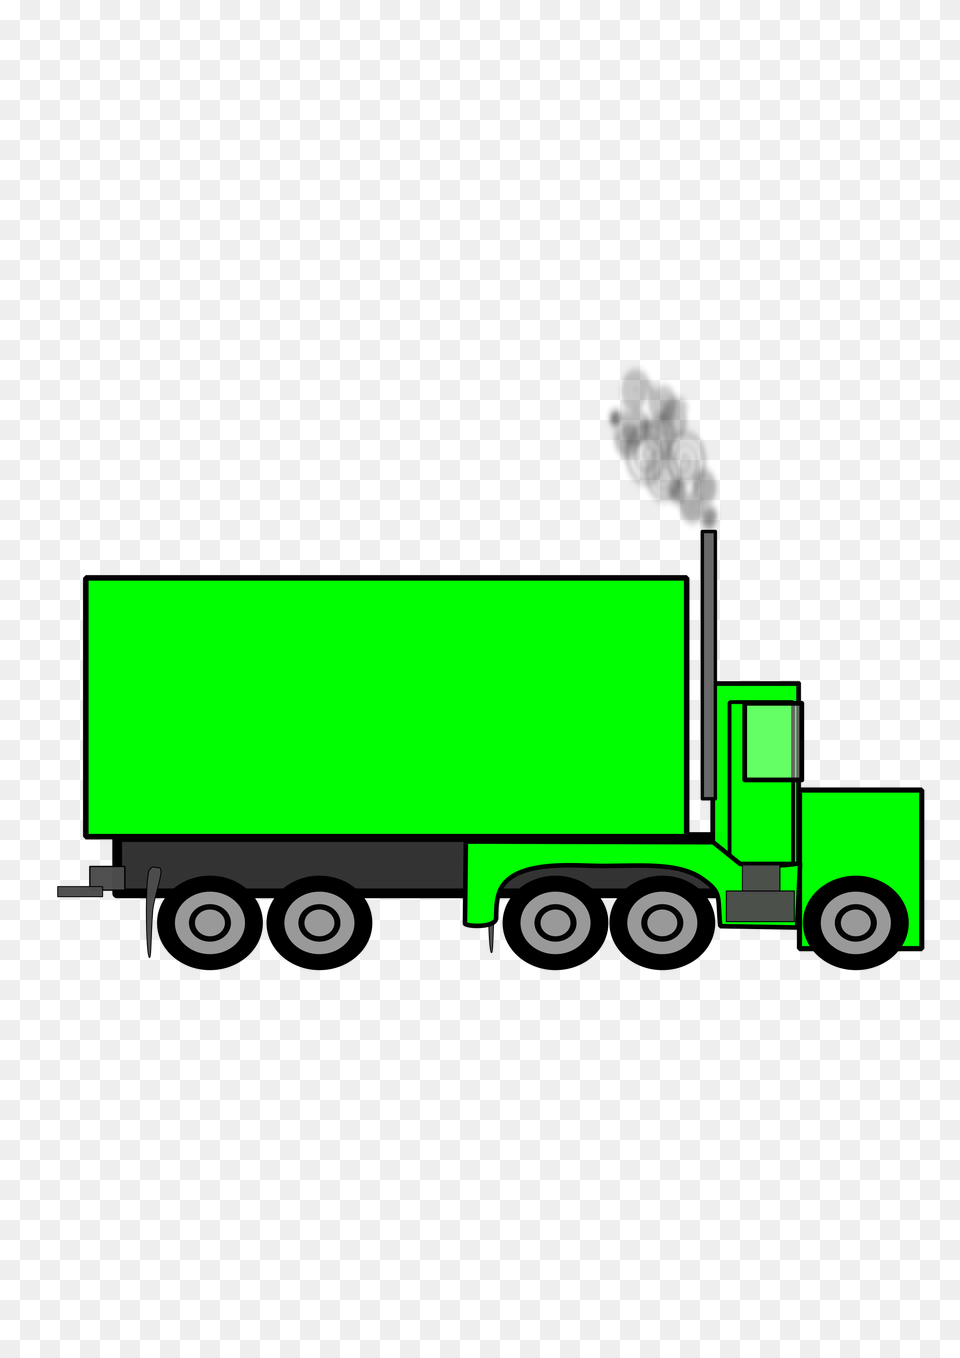 Semi Truck Icons, Trailer Truck, Transportation, Vehicle, Machine Png